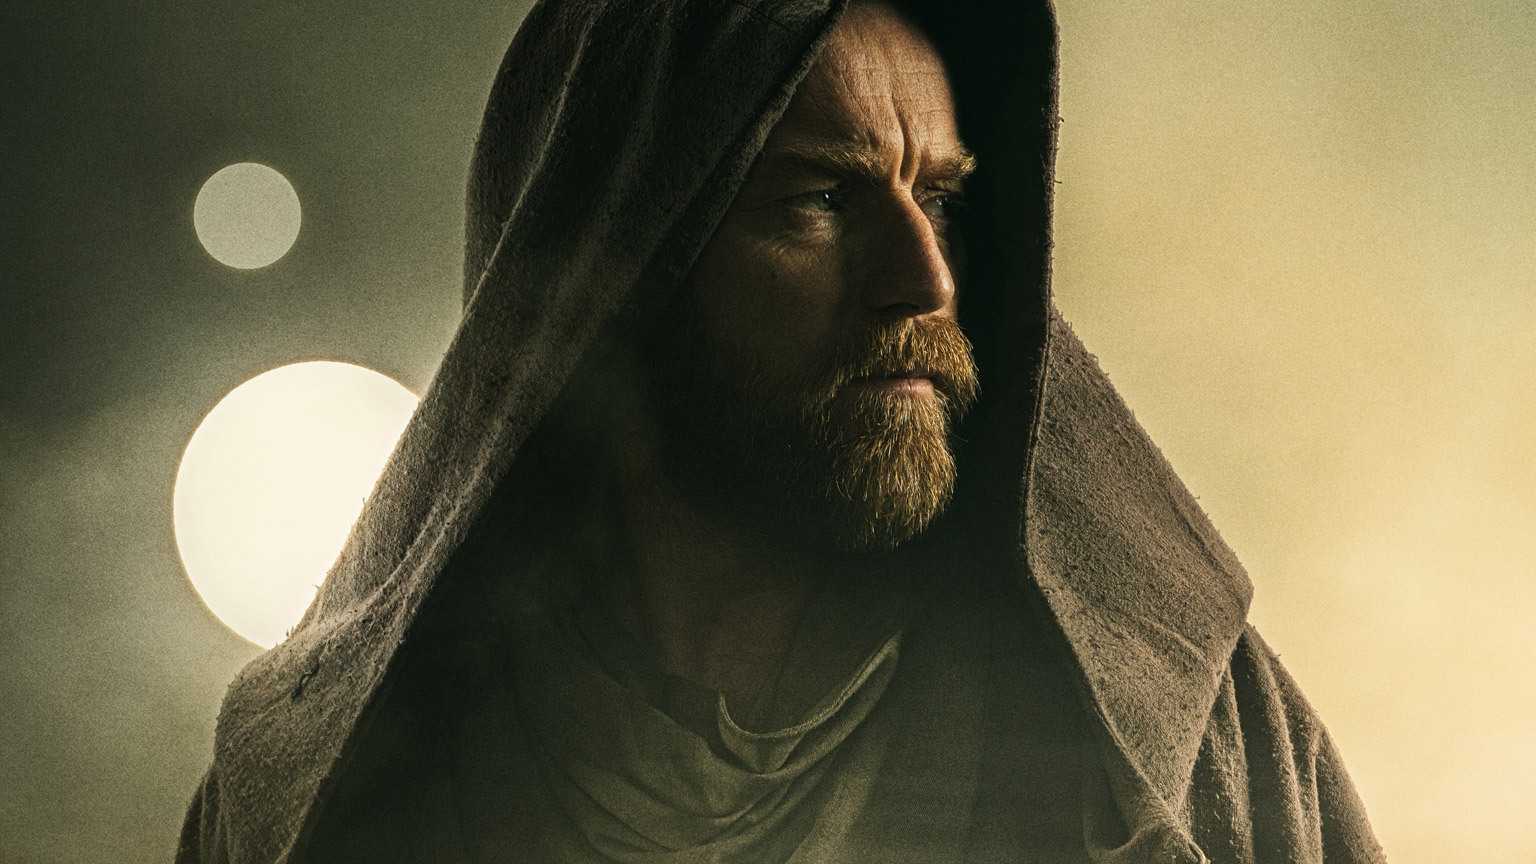 Obi-Wan Kenobi Episode 1&2 Review - Ewan McGregor’s return as the Jedi